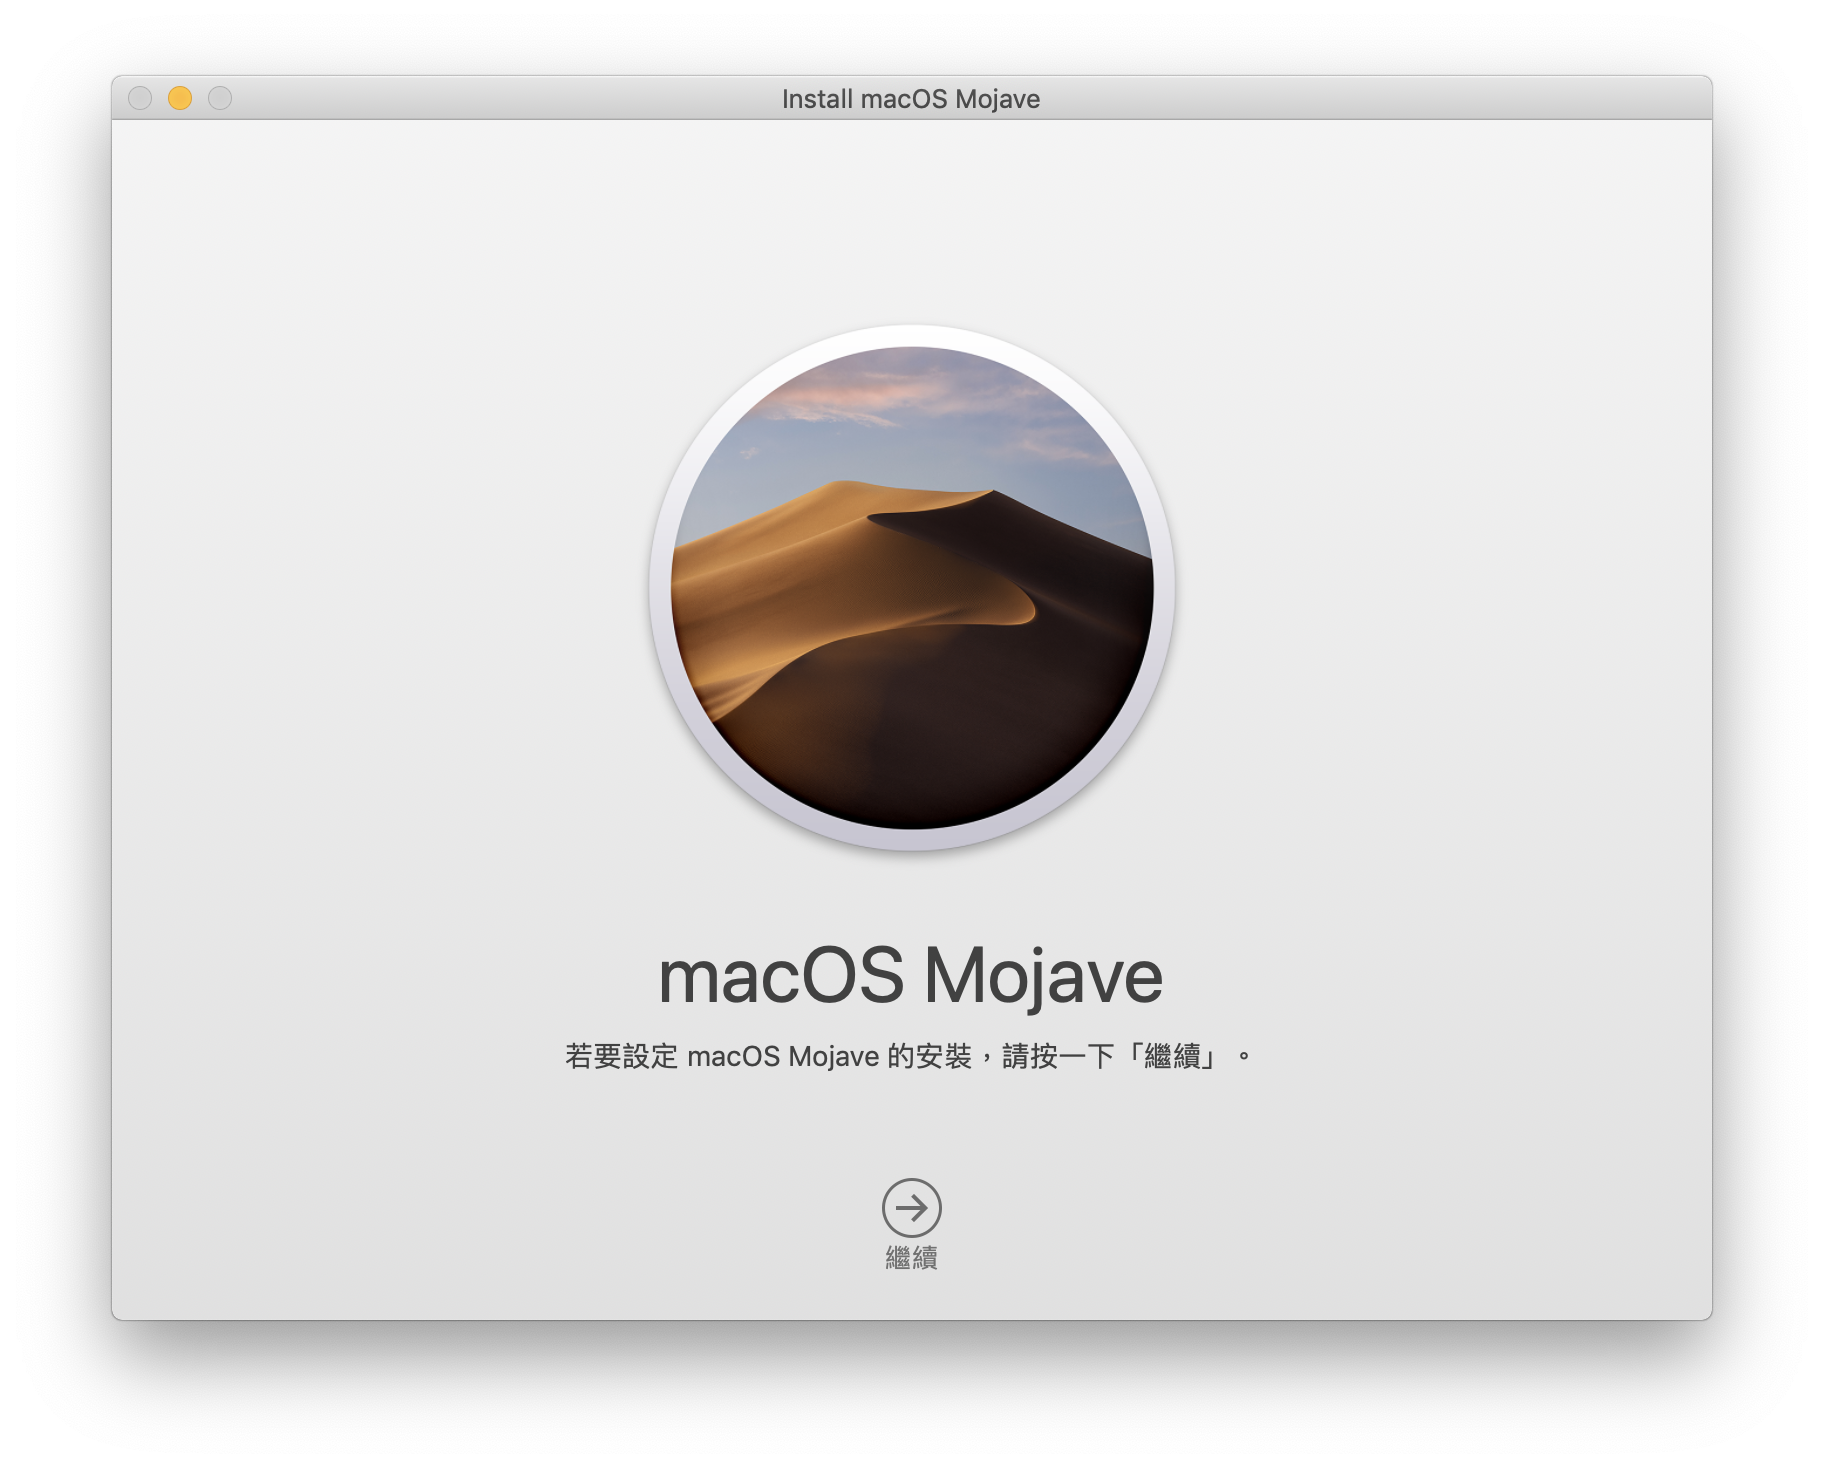 macOS 10.14、macOS Mojave、macOS 10.14 Beta